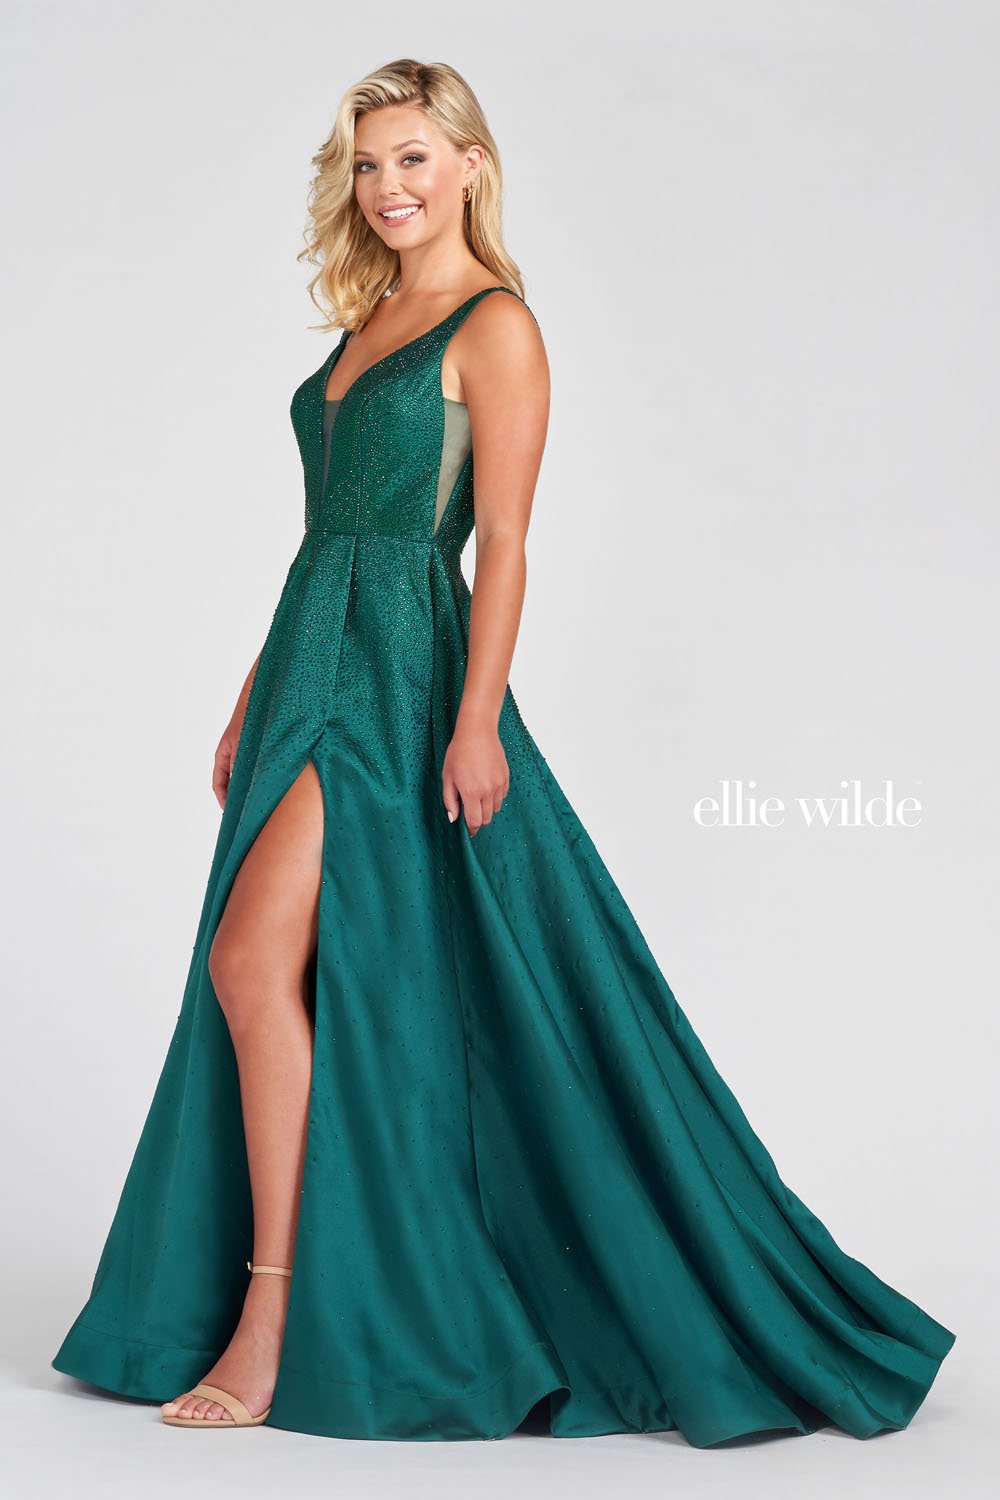 Ellie Wilde Emerald EW122021 Prom Dress Image.  Emerald formal dress.